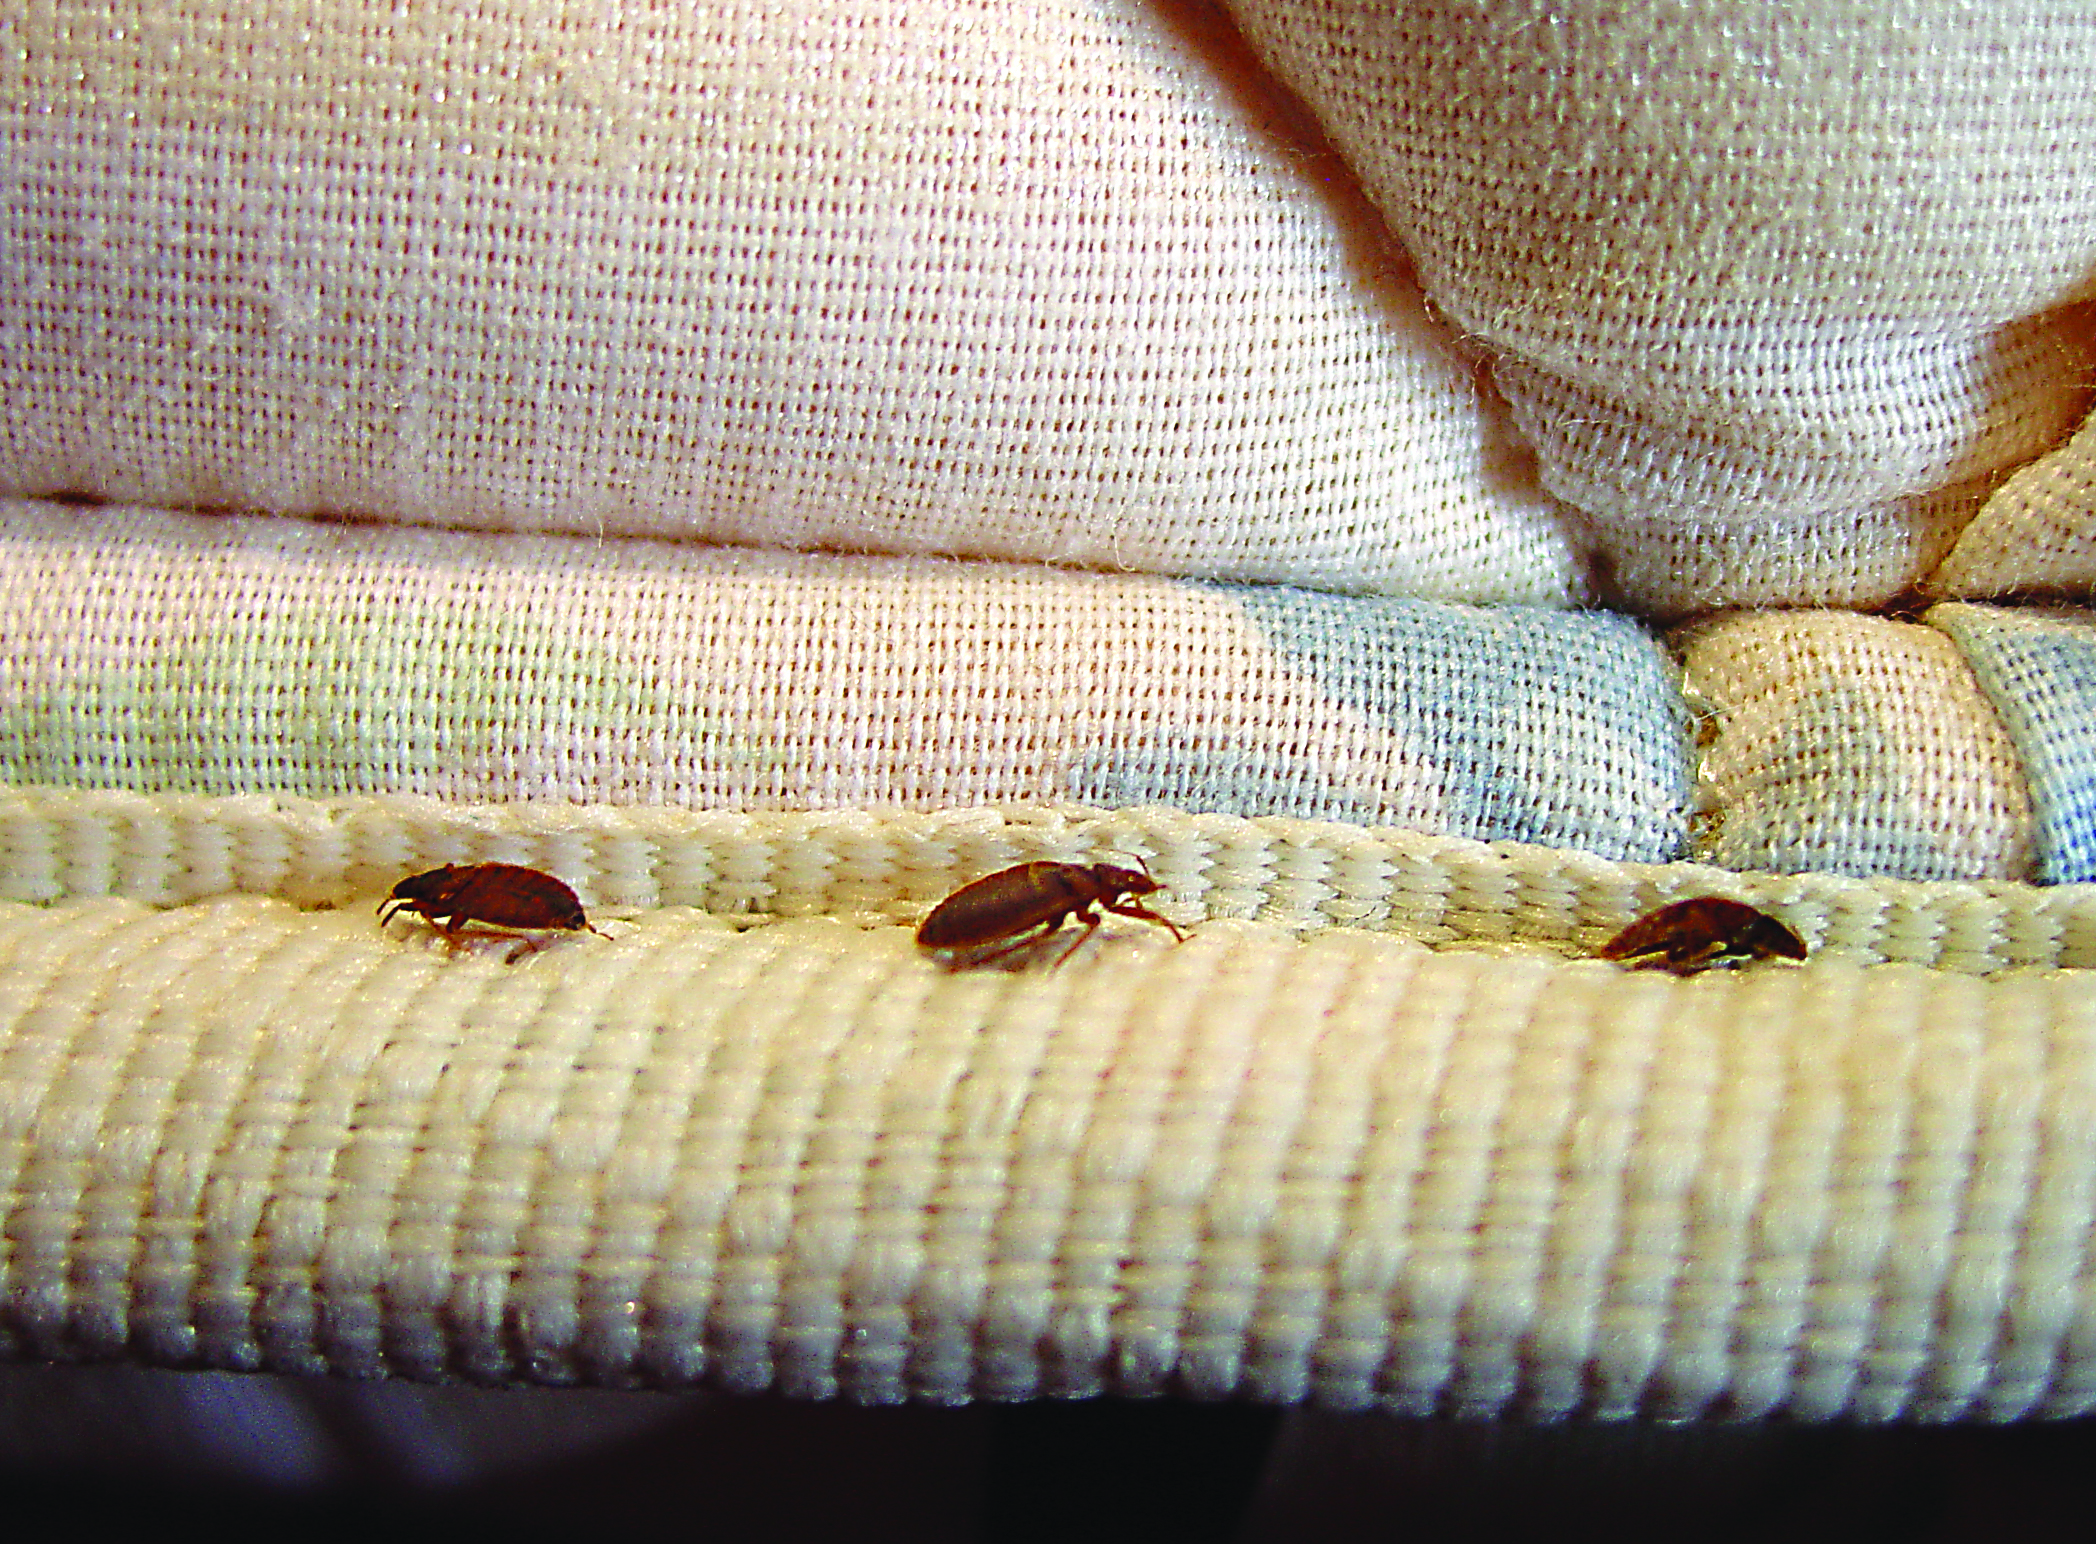 Bedbugs in Comforters & Bedding - Bedbug Bedding Infestations